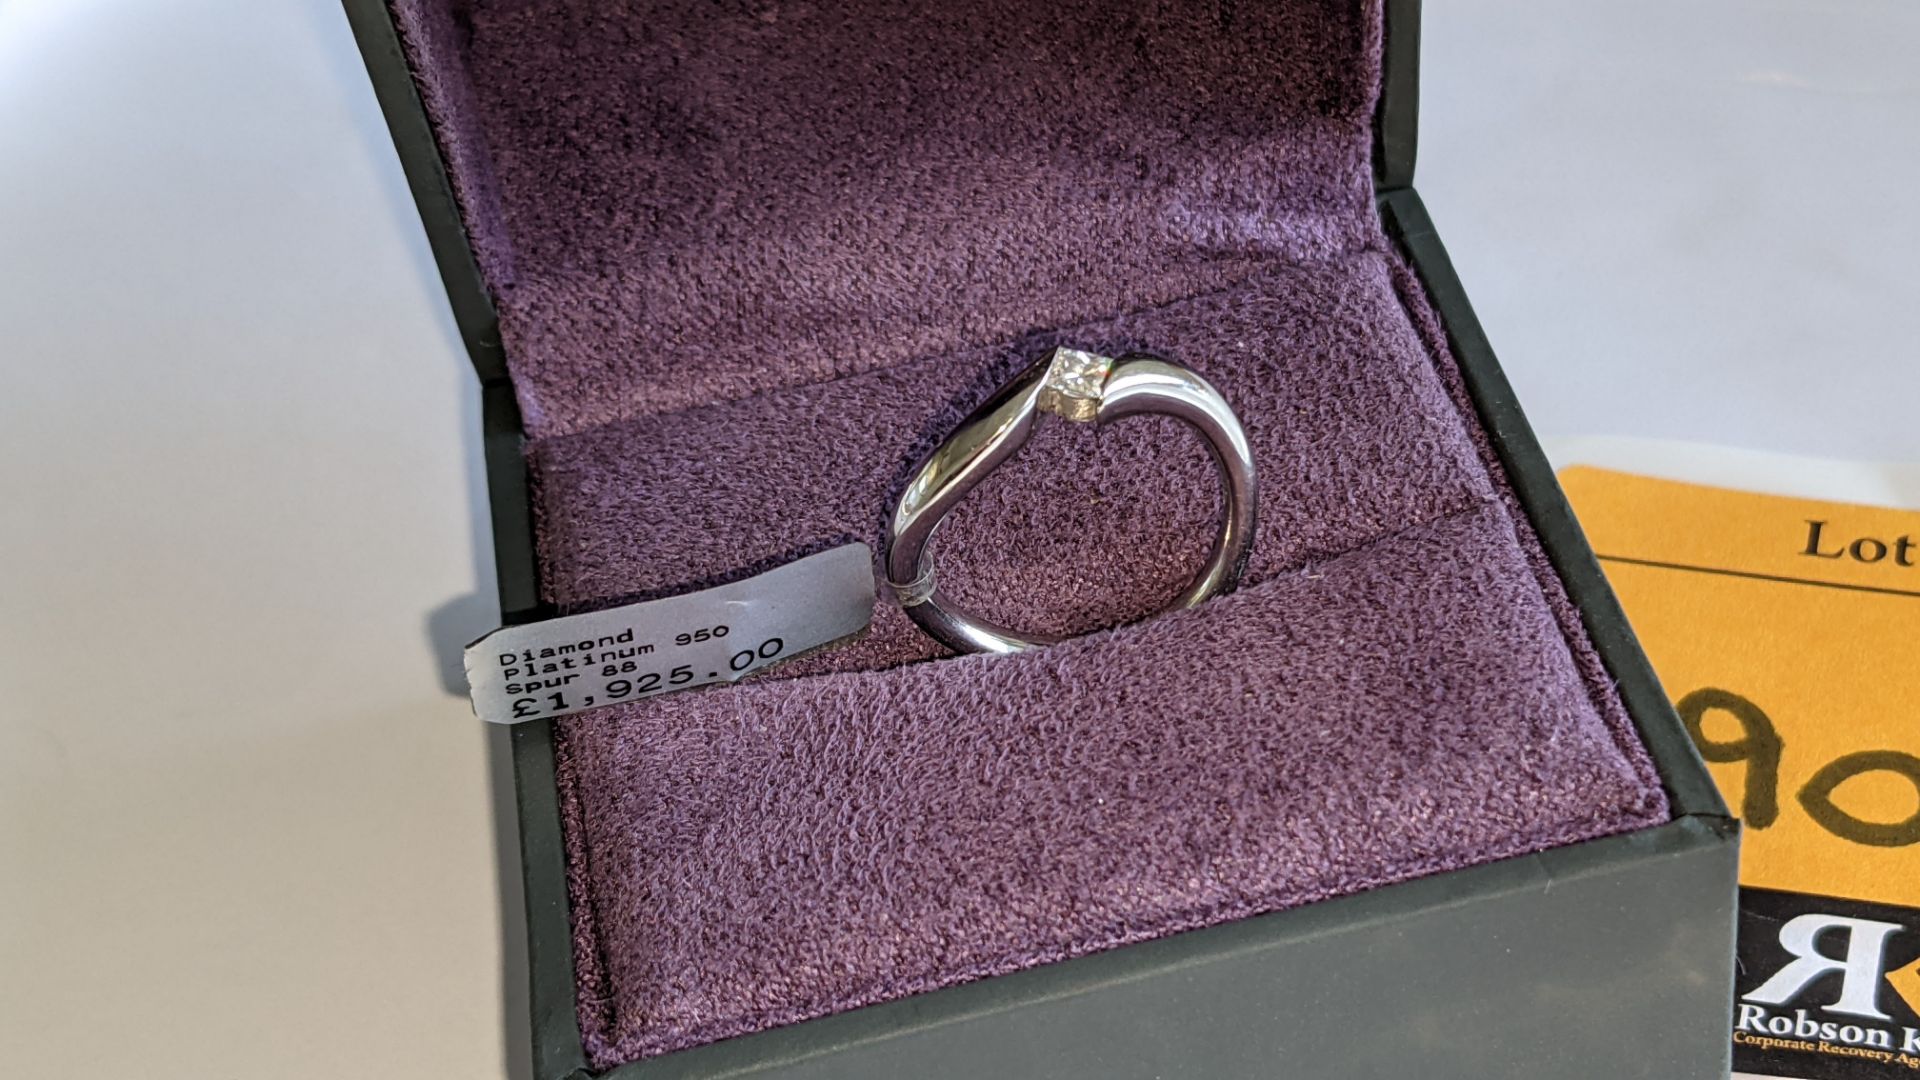 Platinum 950 & diamond ring with 0.17ct D/IF diamond. RRP £1,925 - Image 2 of 15